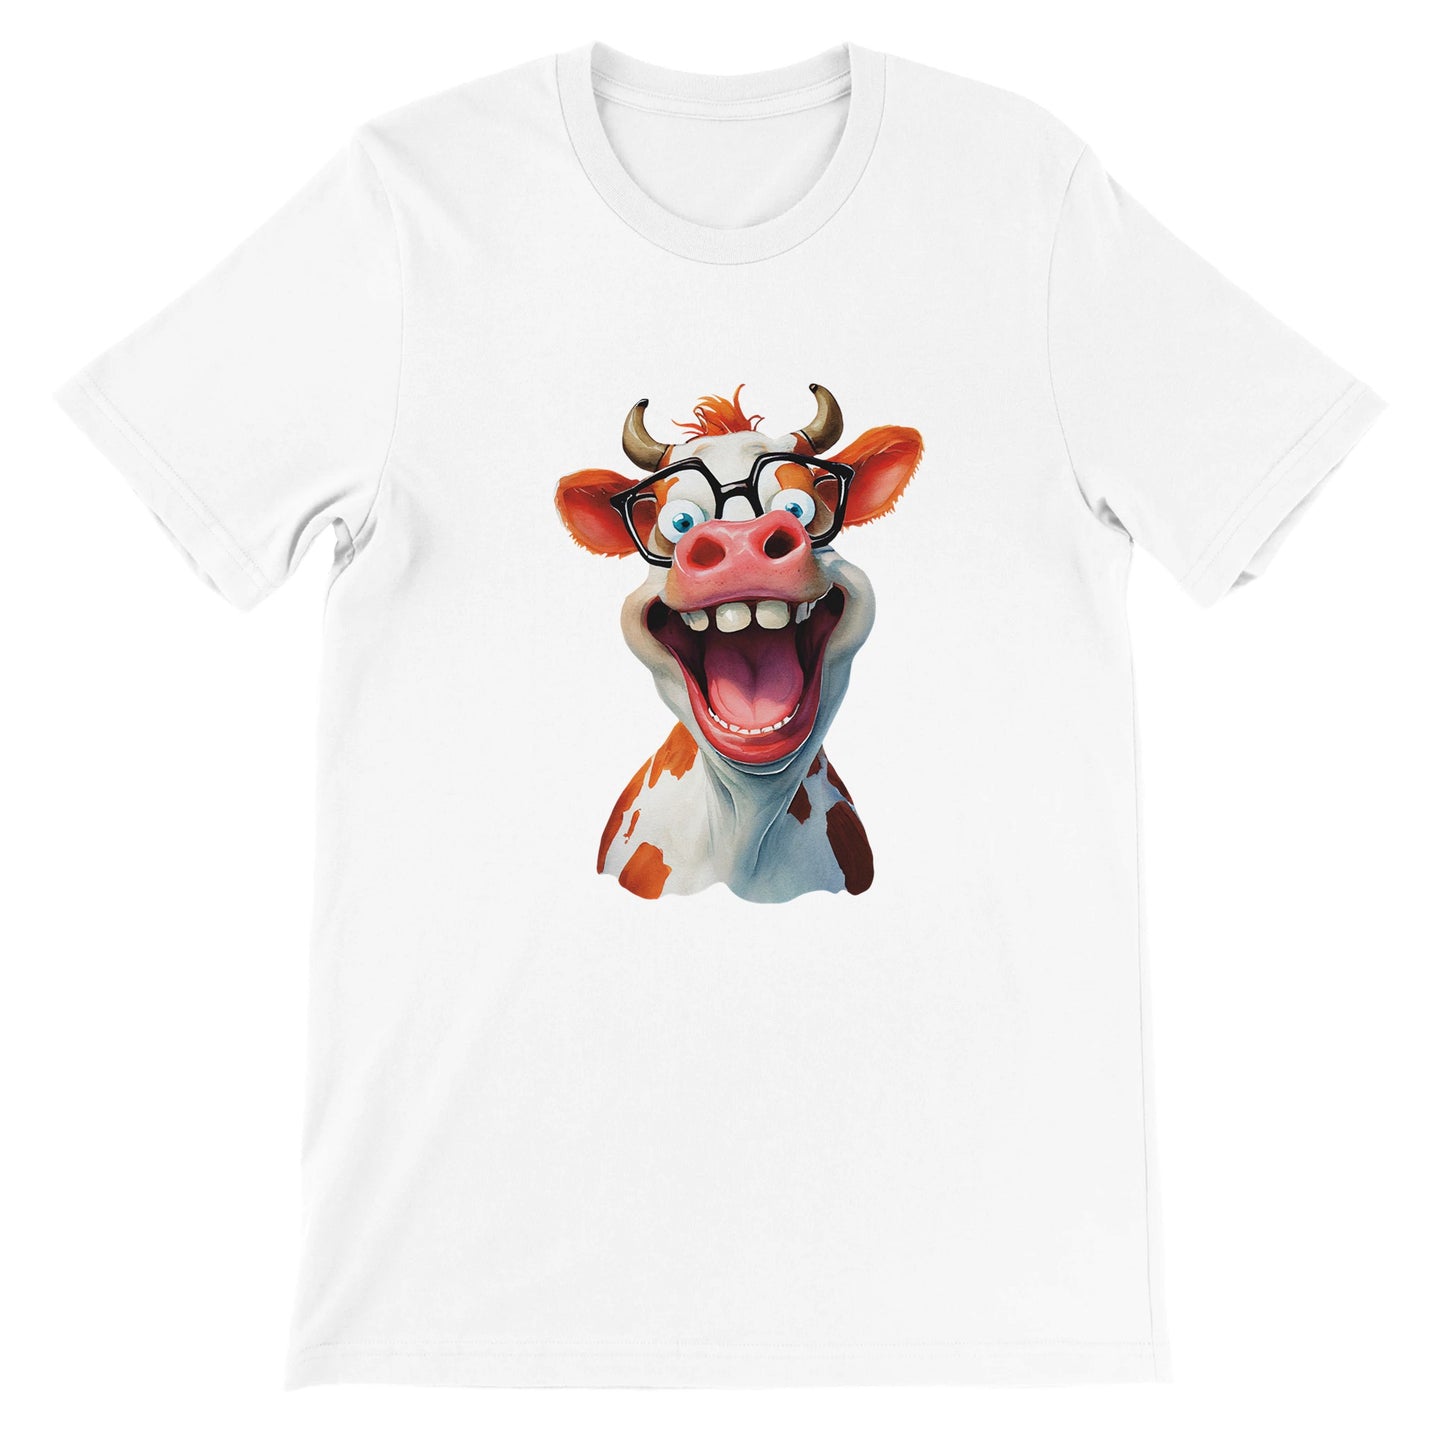 Budget Unisex Crewneck T-shirt/Funny-Cow